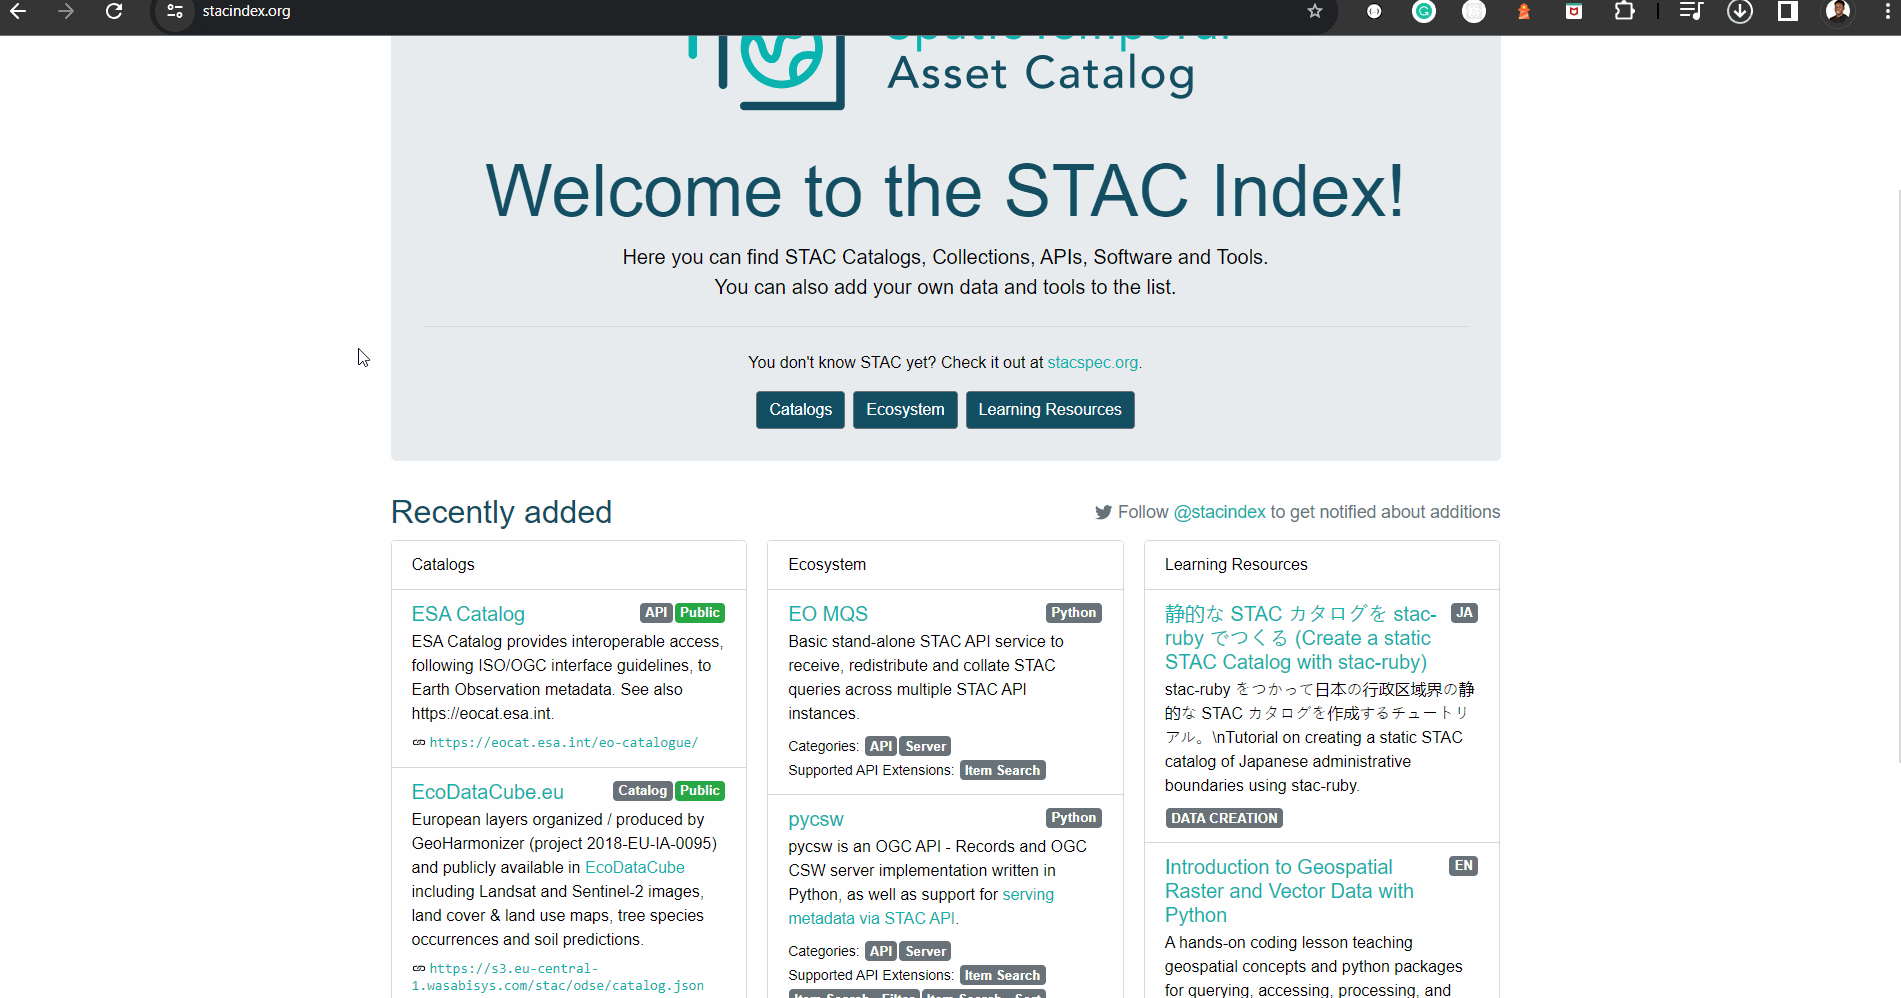 The STAC Index